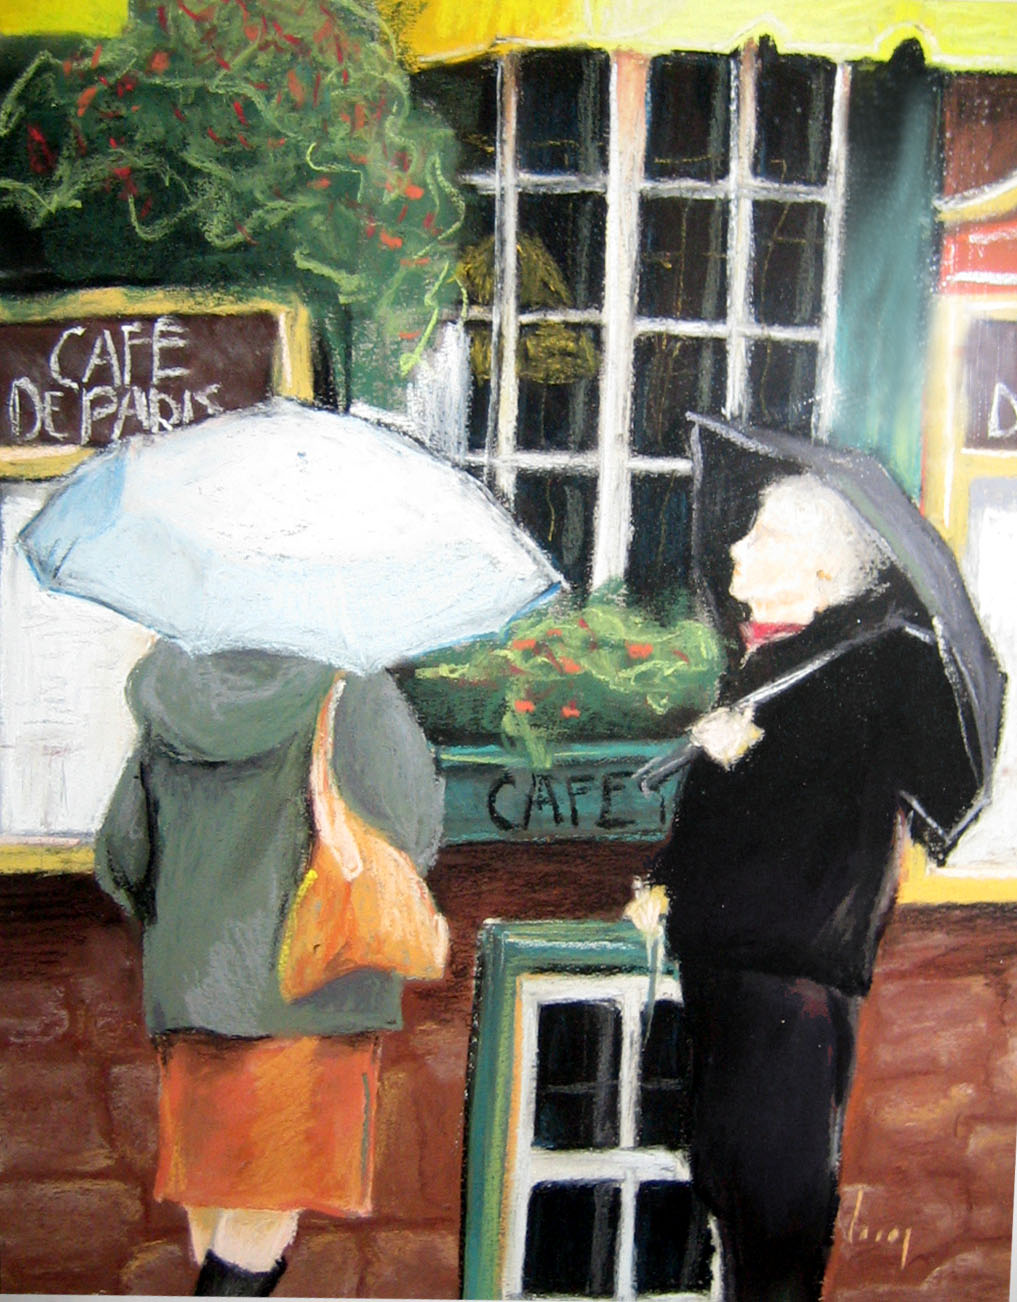 Cafe De Paris, 2006